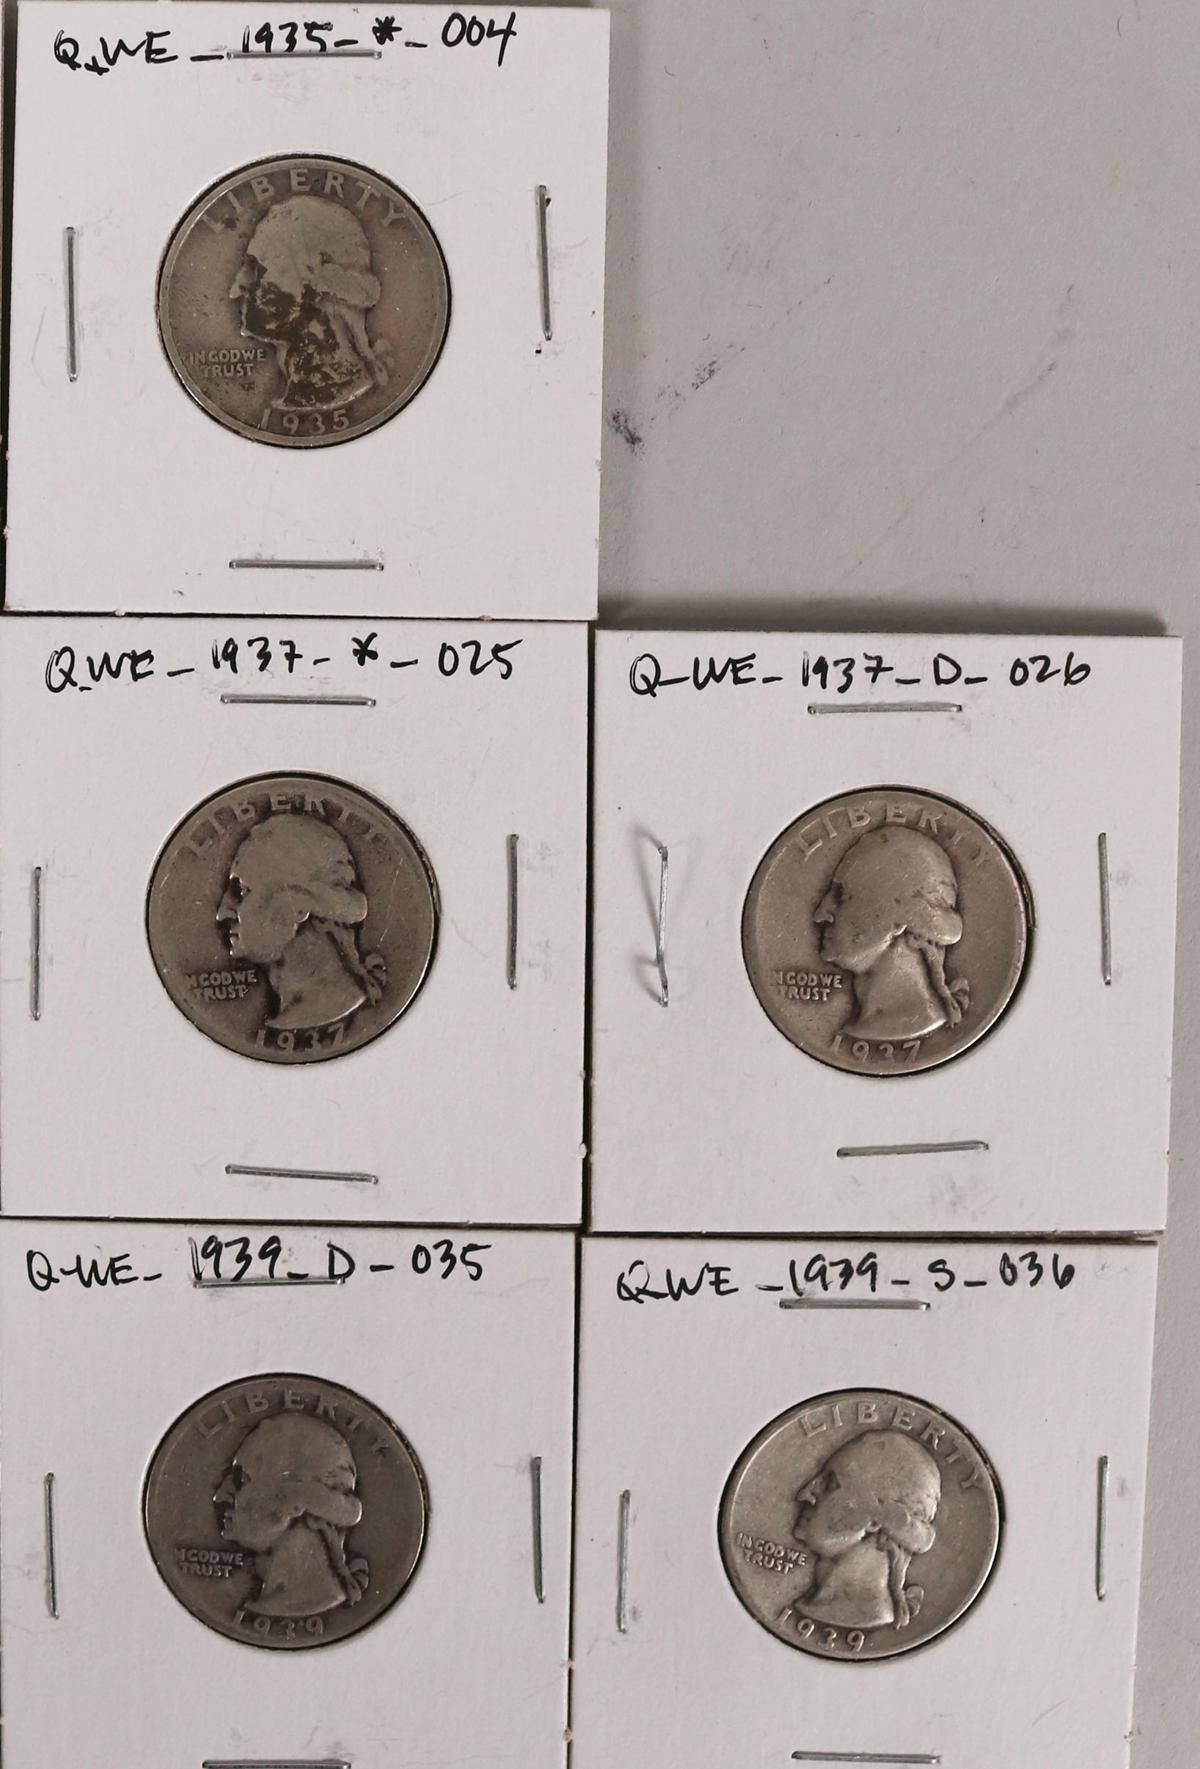 10 Washington Silver Quarters